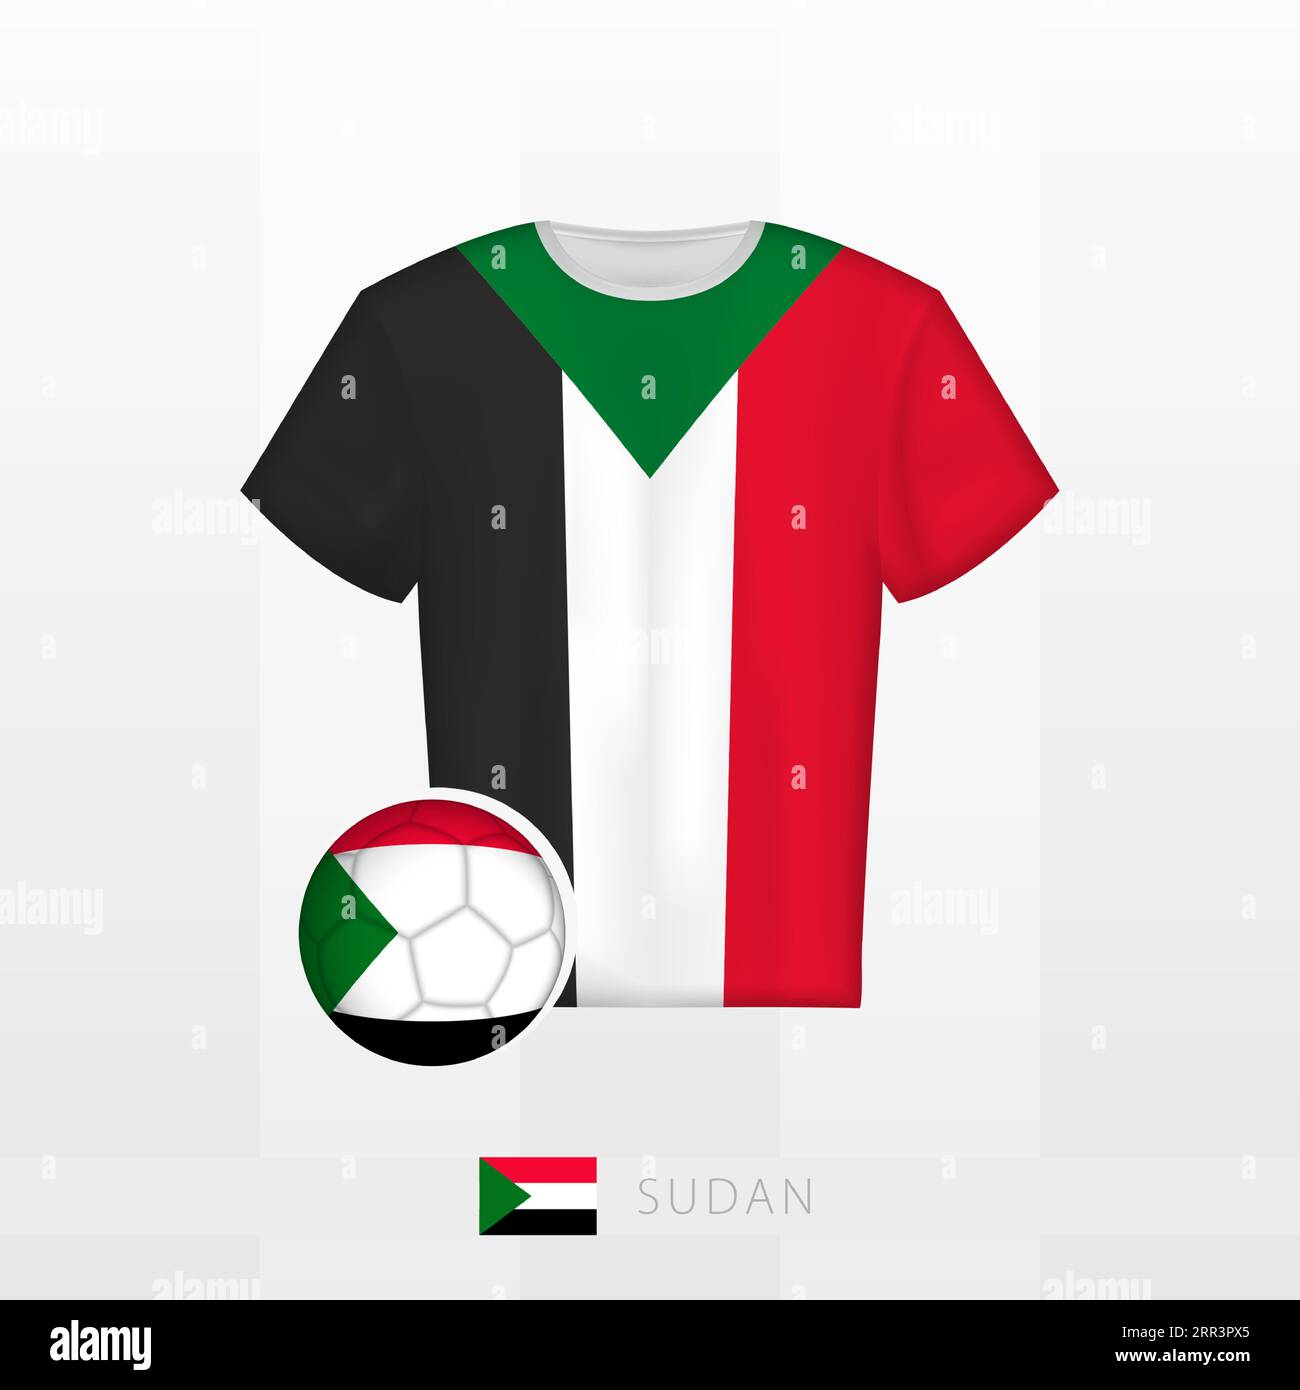 Football uniform of national team of Sudan with football ball with flag of Sudan. Soccer jersey and soccerball with flag. Vector template. Stock Vector